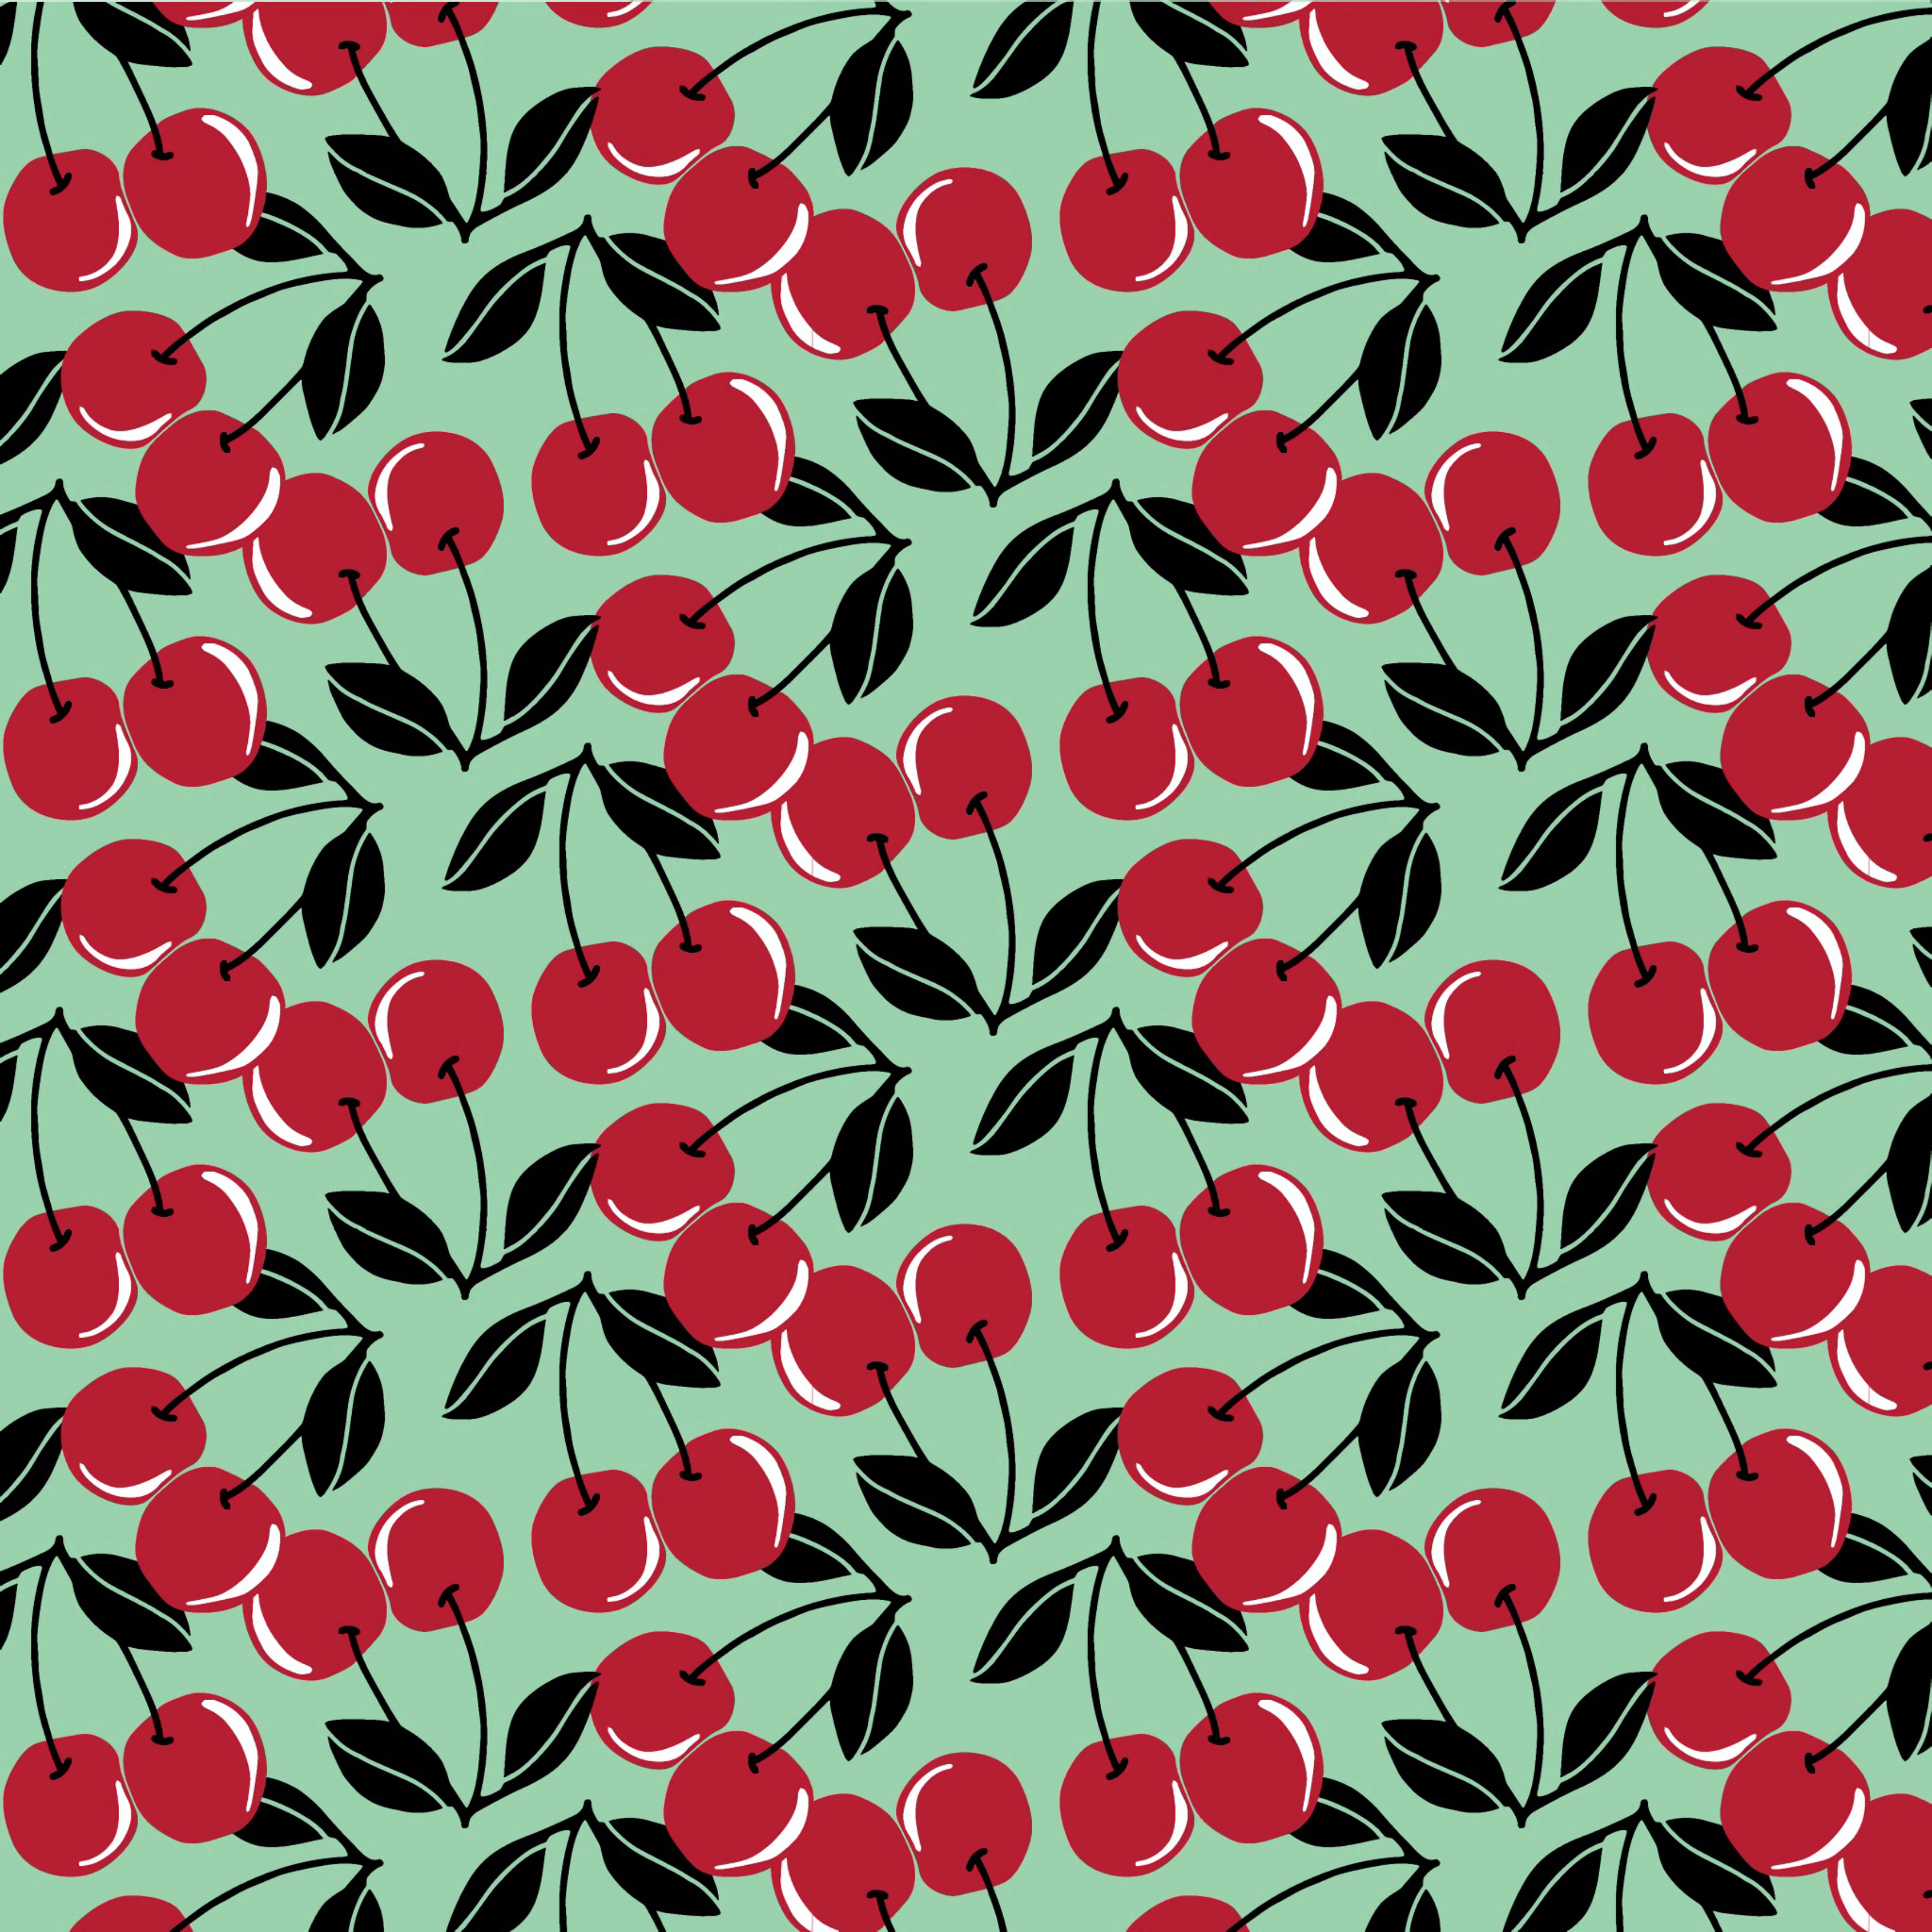 fruits, leaves, berries, red, pattern, texture, textures, cherries, petioles